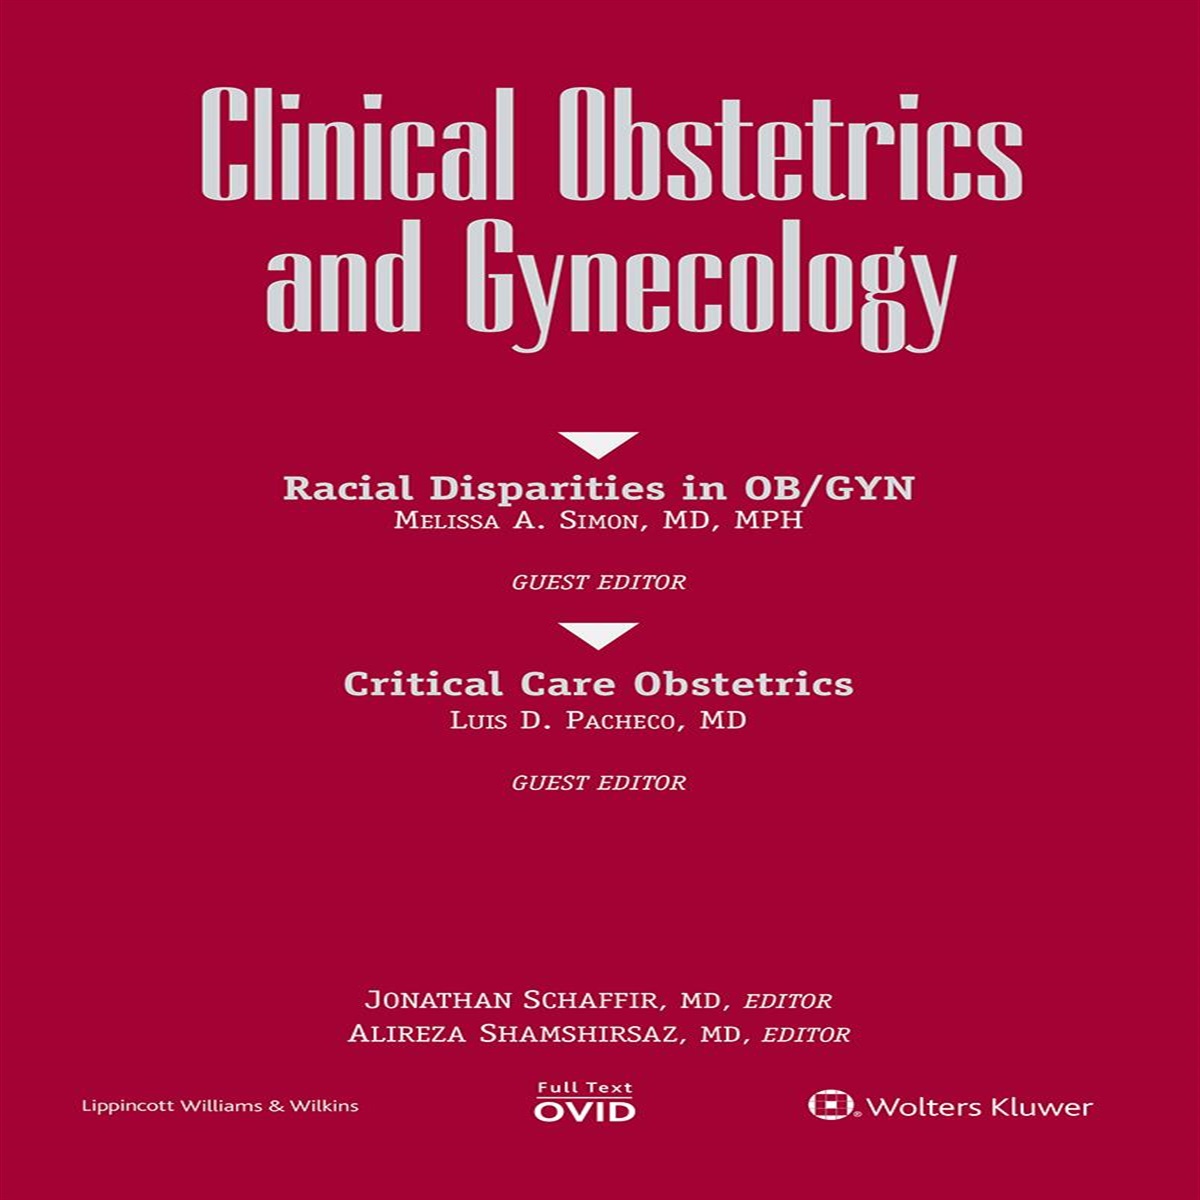 Contributors: Critical Care Obstetrics